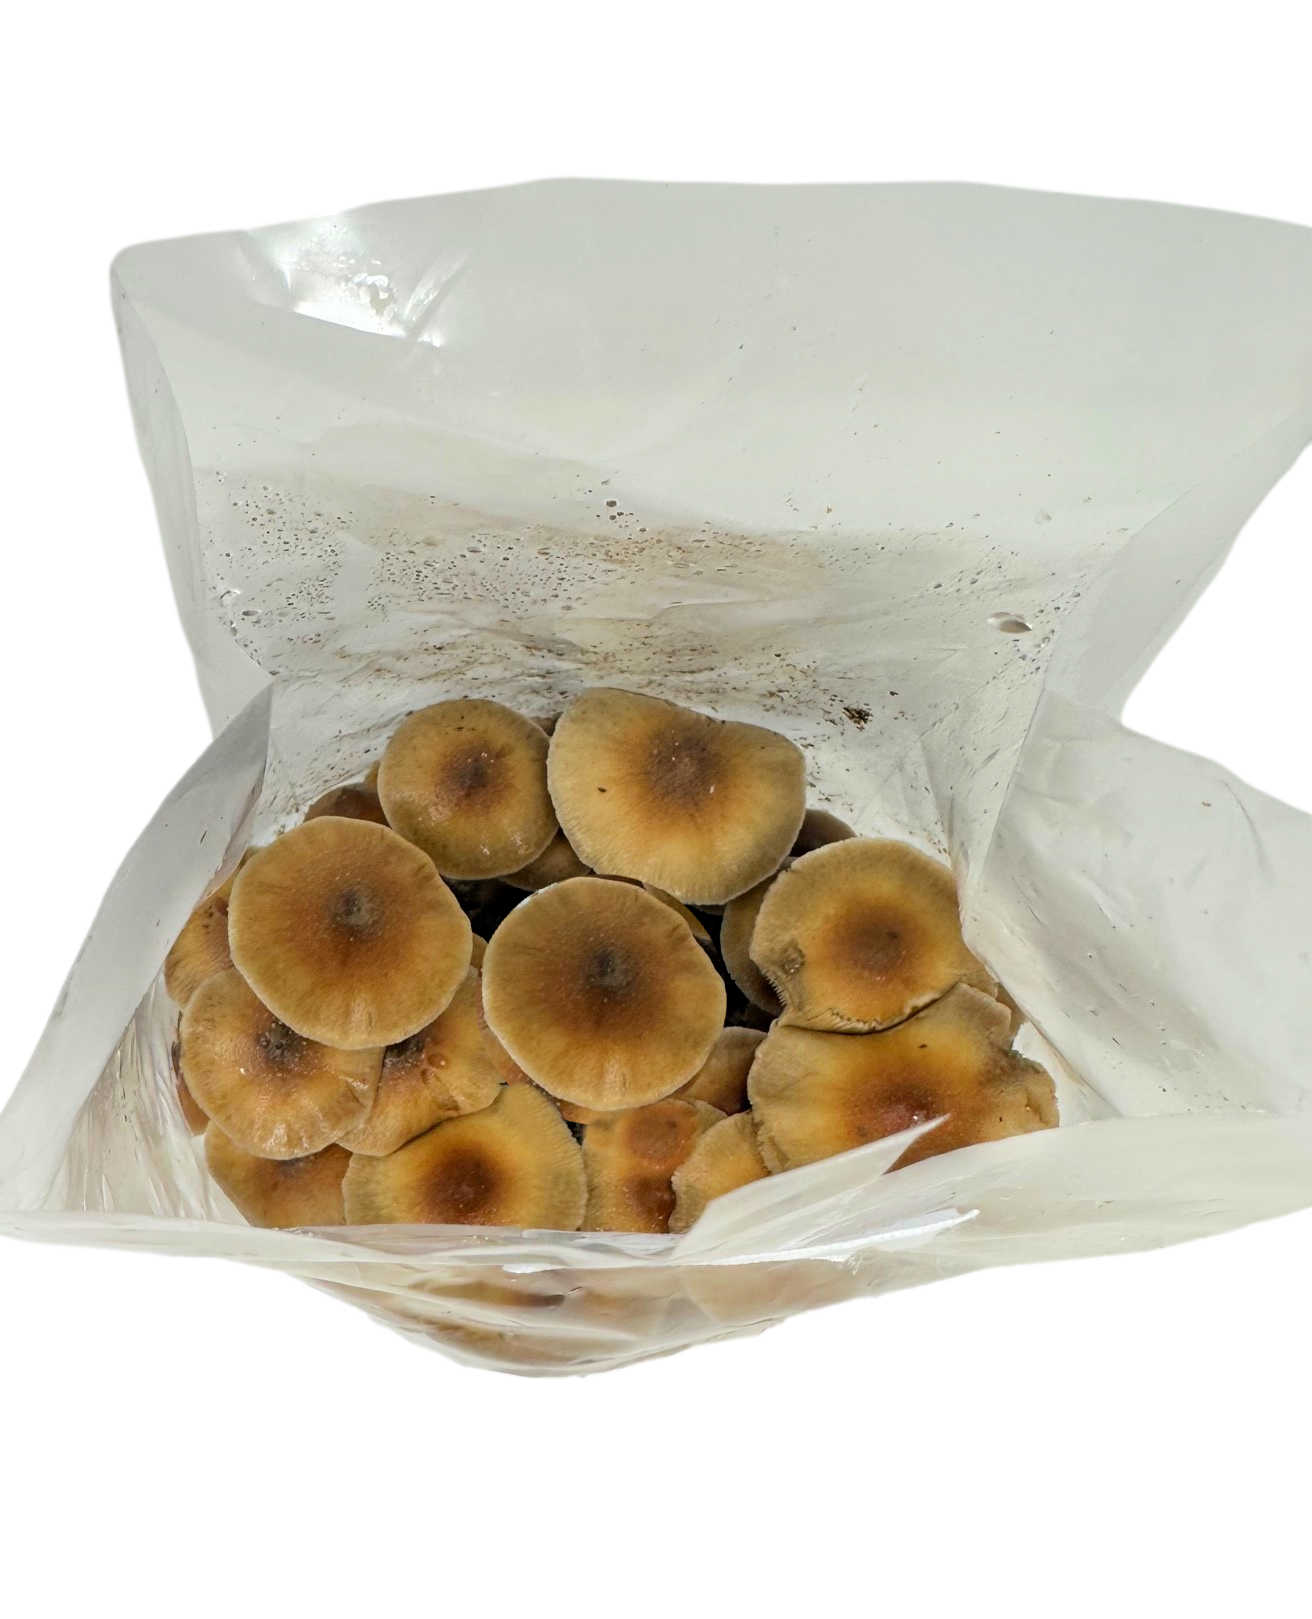 https://www.midwestgrowkits.com/resize/Shared/Images/Product/All-in-One-Mushroom-Grow-Bag-4-lbs-for-Manure-Loving-Mushrooms/mushroom_top_bag_web.jpg?bw=600&w=600